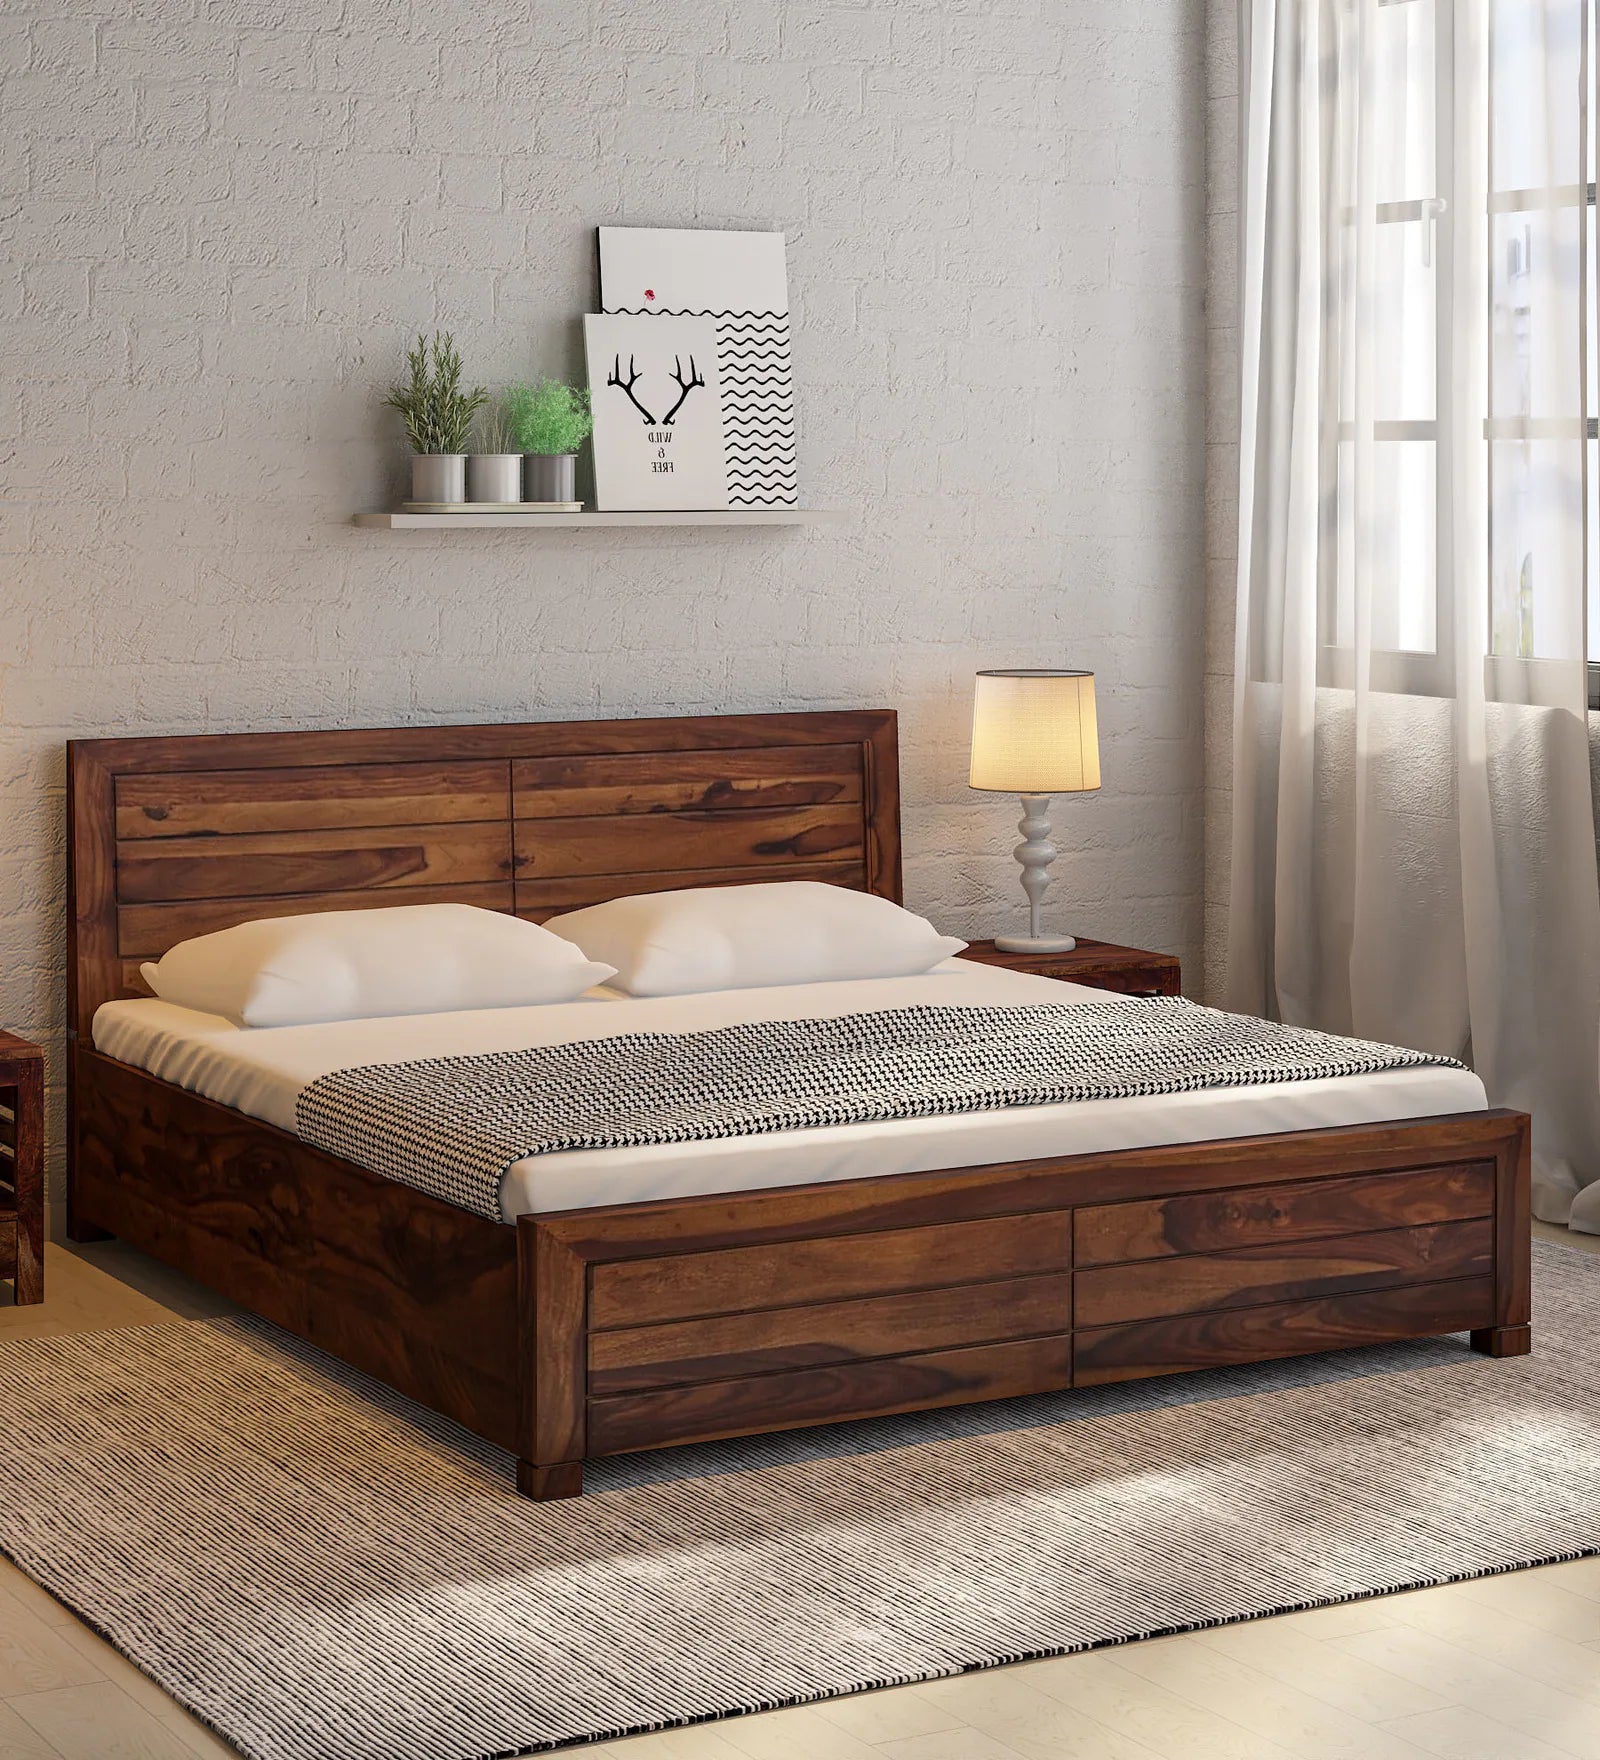 Moscow Solid Wood Bed With Box Storage In Provincial Teak Finish By Rajwada - Rajwada Furnish